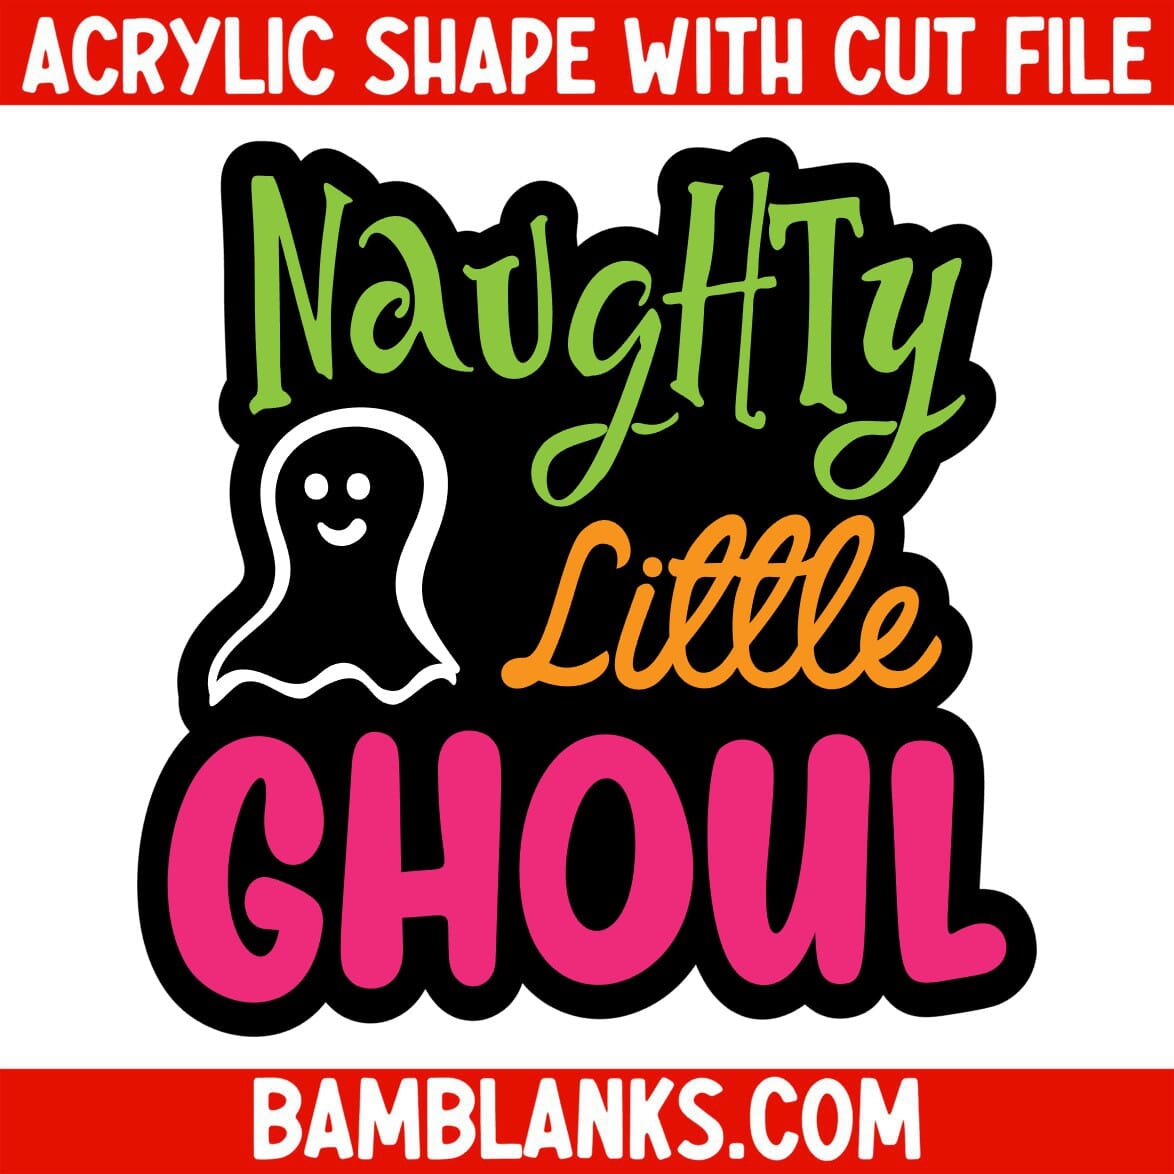 Naughty Little Ghoul - Acrylic Shape #993